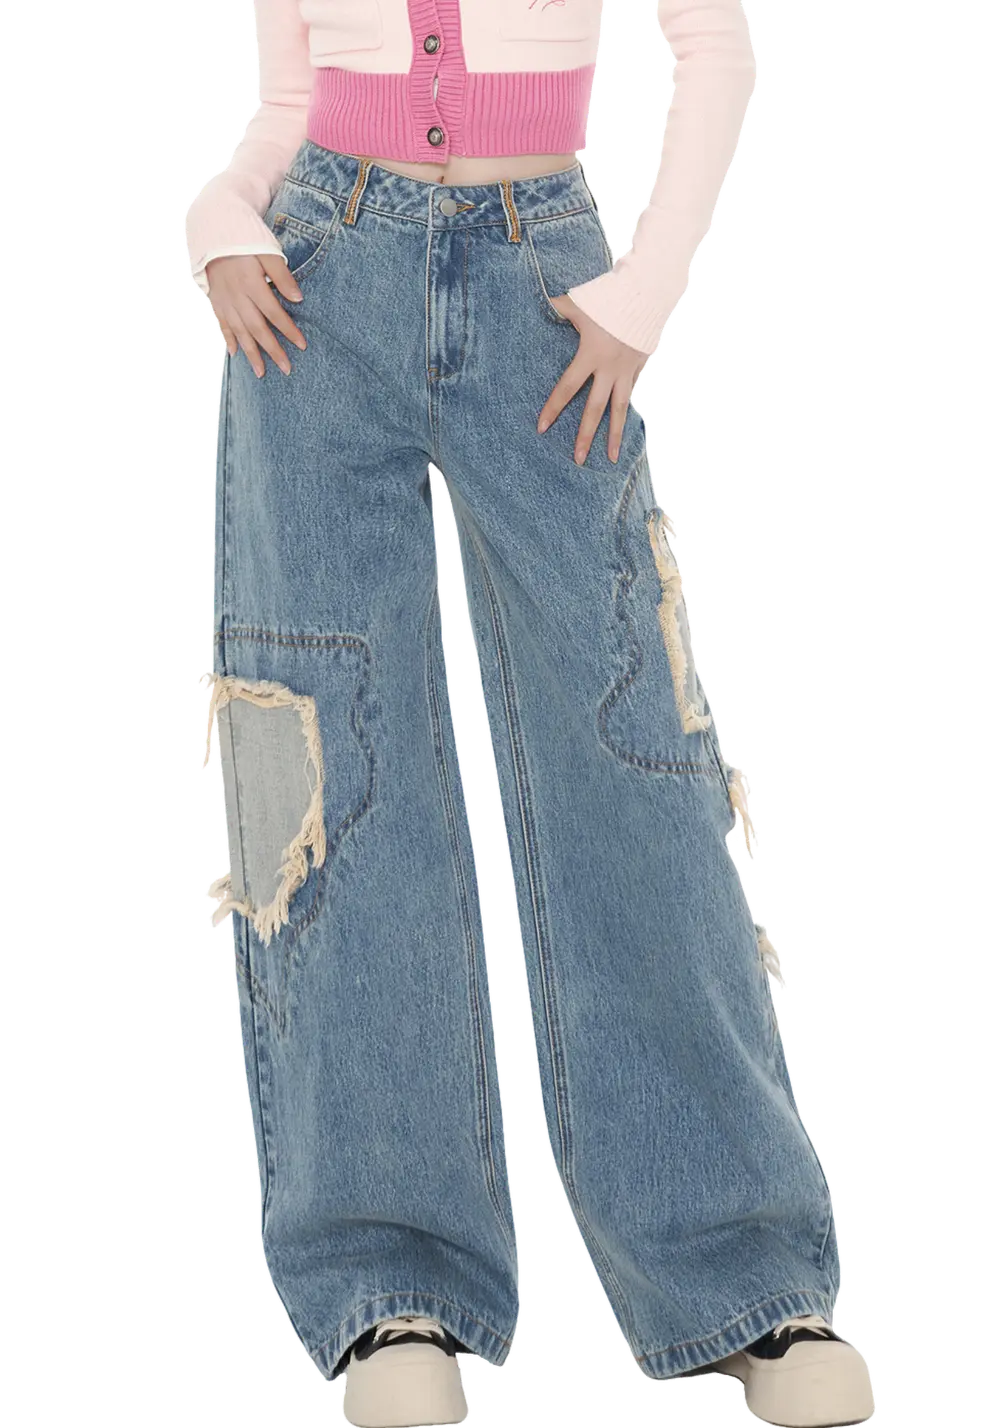 Irregular Ripped Jeans - PSYLOS 1, Irregular Ripped Jeans, Pants, WooHa, PSYLOS 1